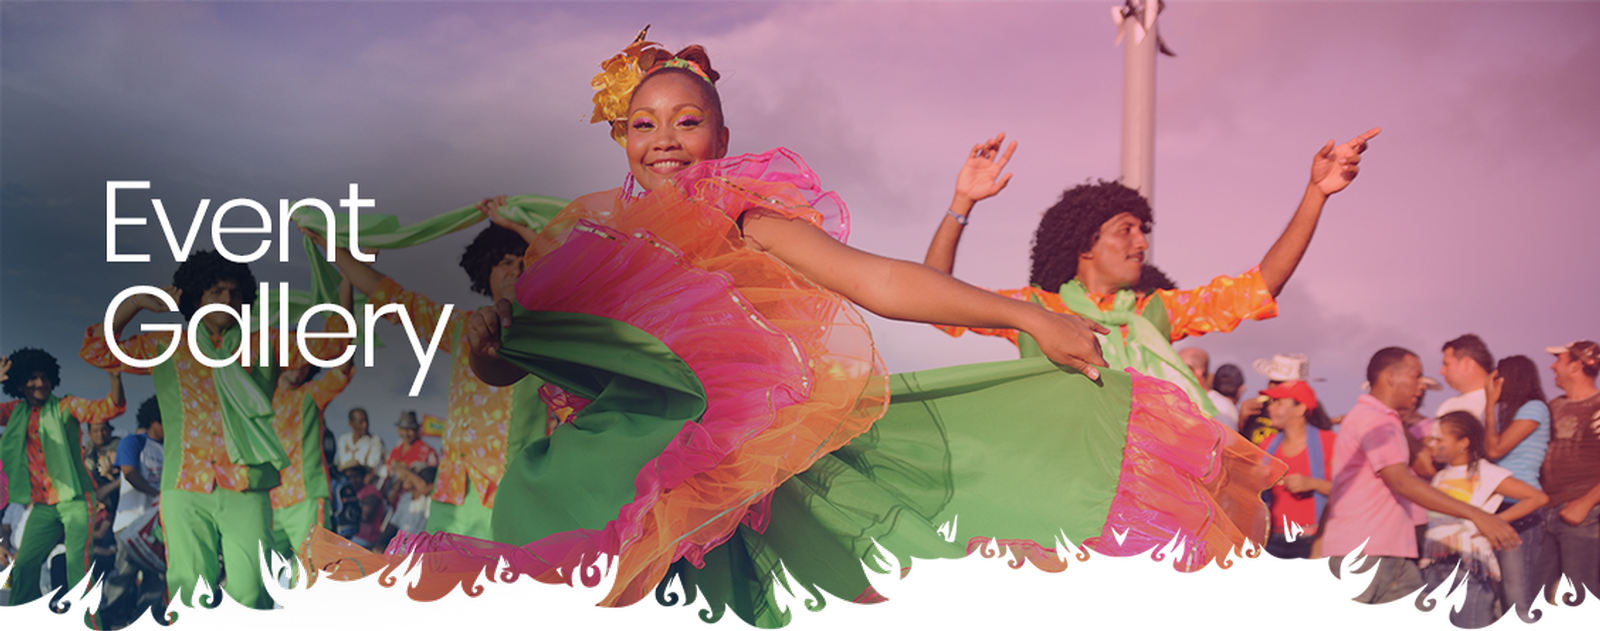 Contemporary Caribbean Arts and Culture Festival at Durham Carifest - Ajax Caribbean Day Carnival